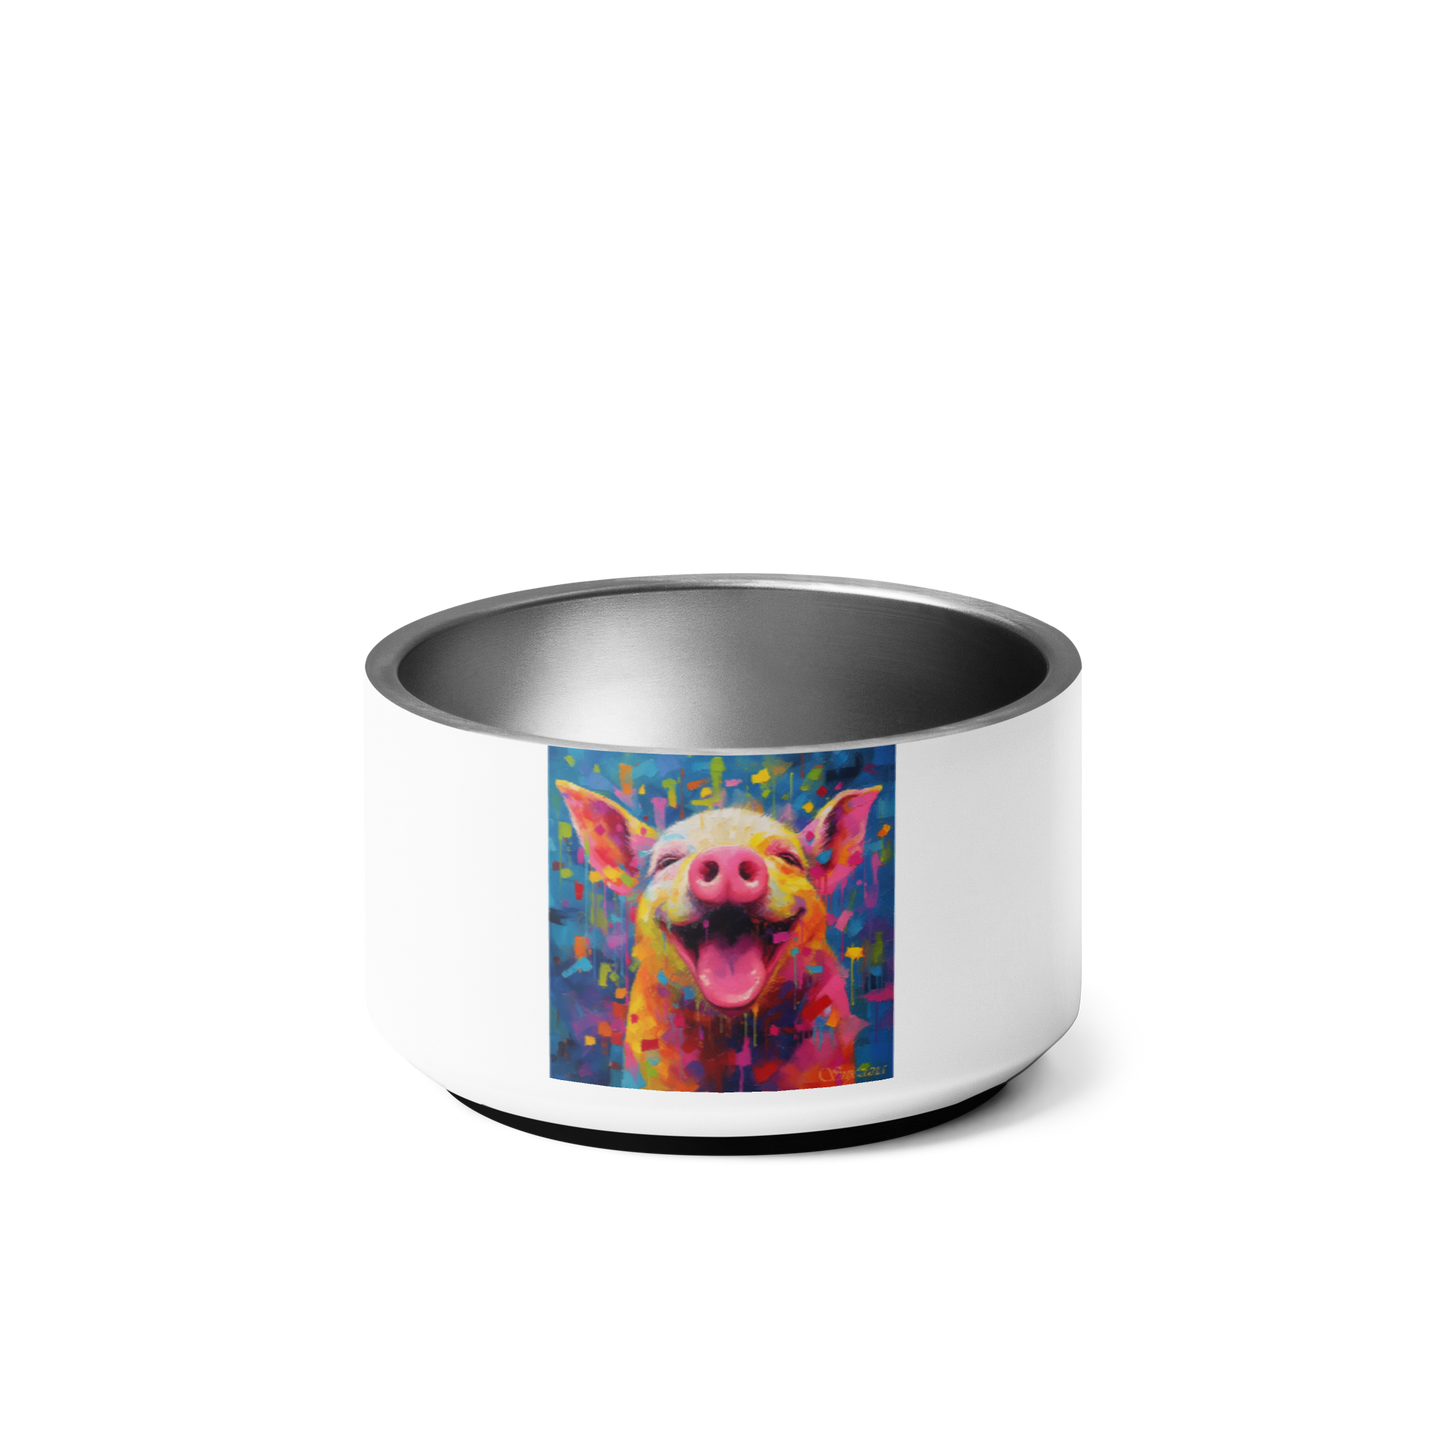 Happy as A Pig Pet bowl